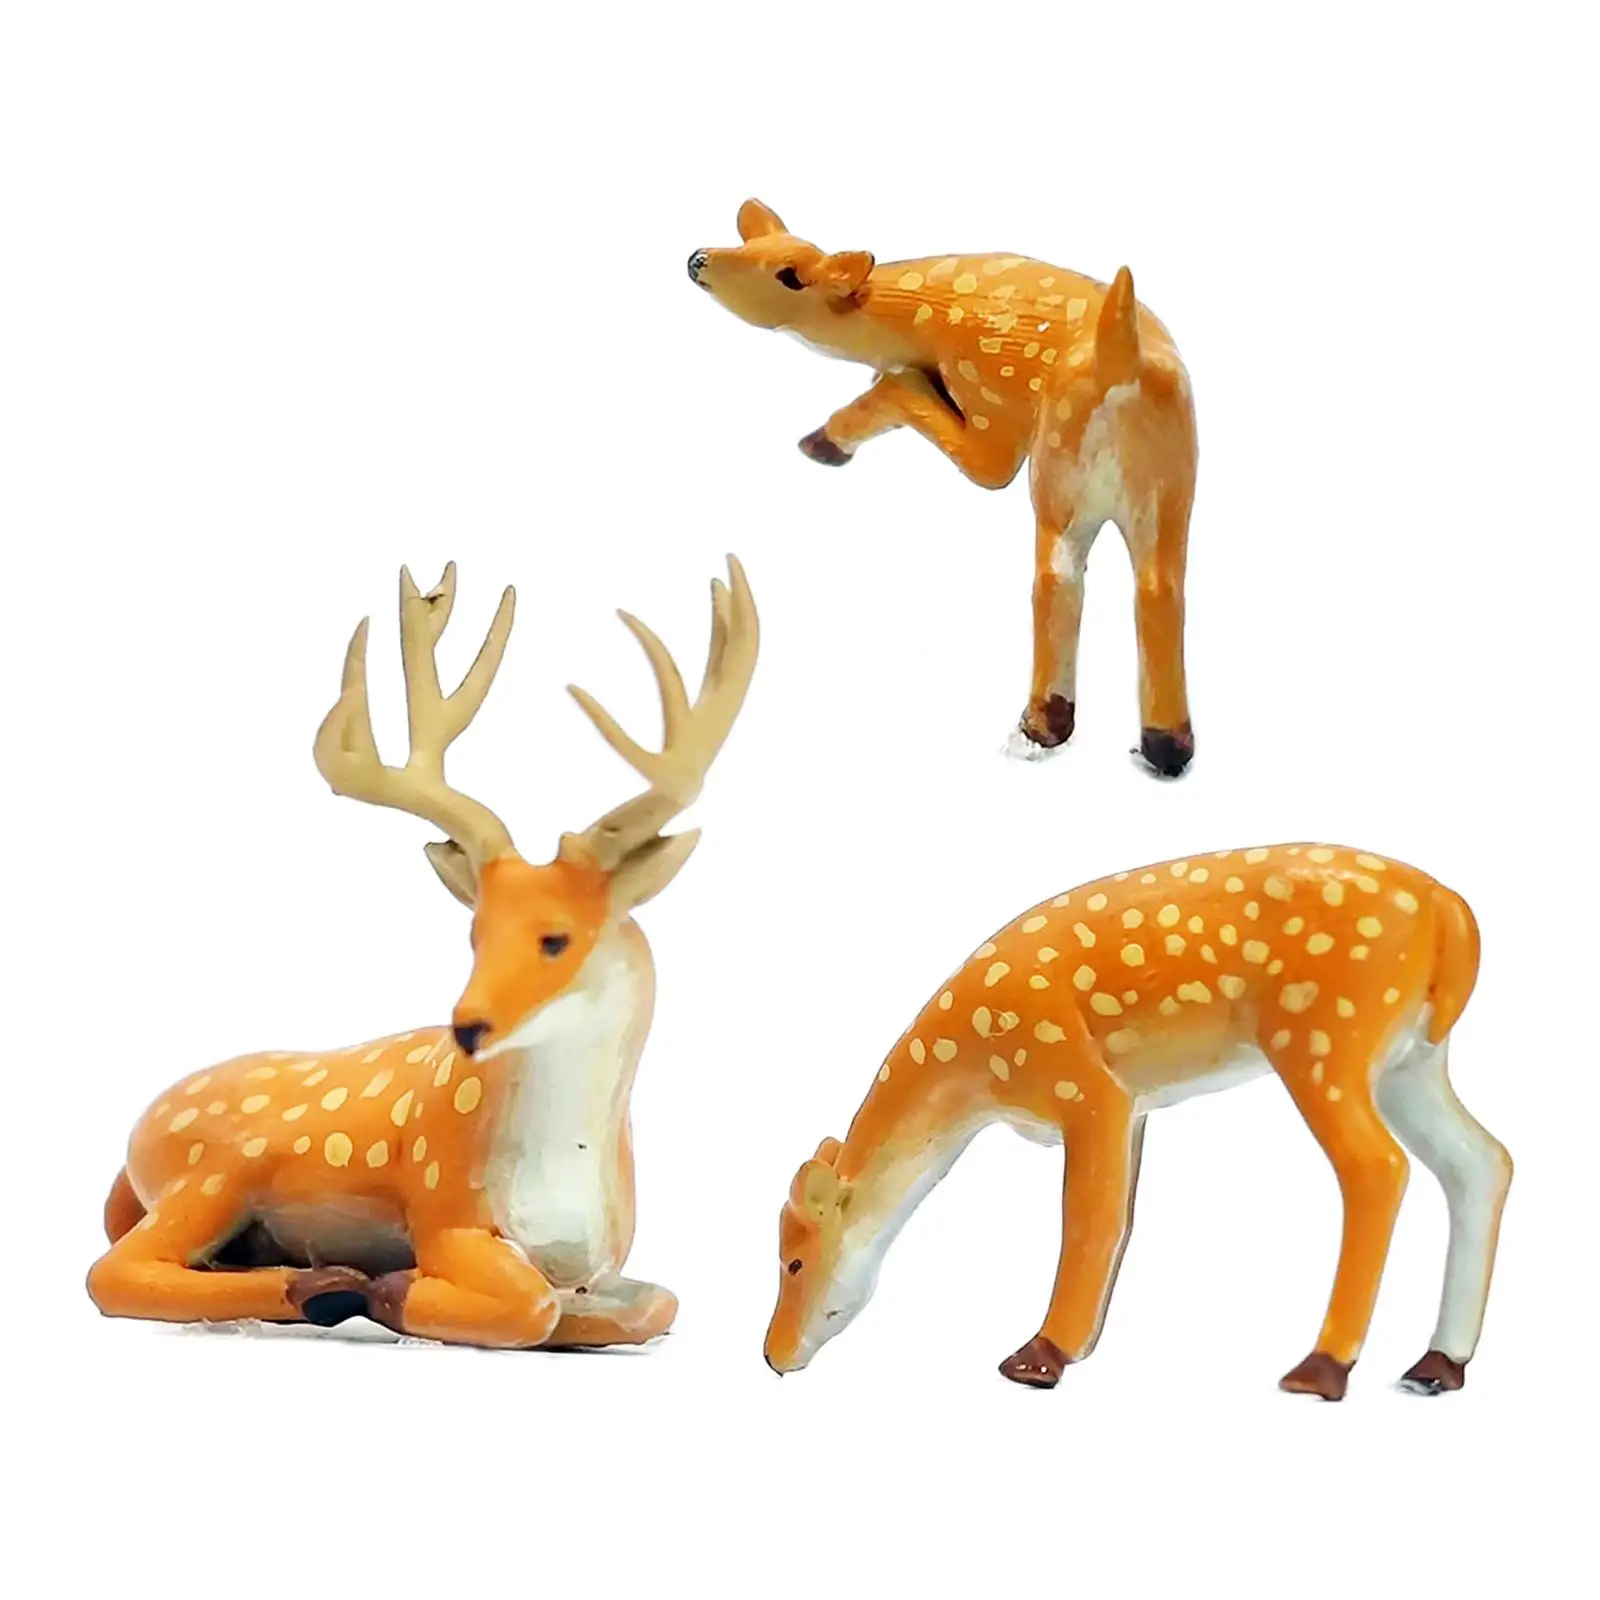 3Pcs 1:64 Miniature Statue small deer Figurines for Desk Decor Diorama Layout